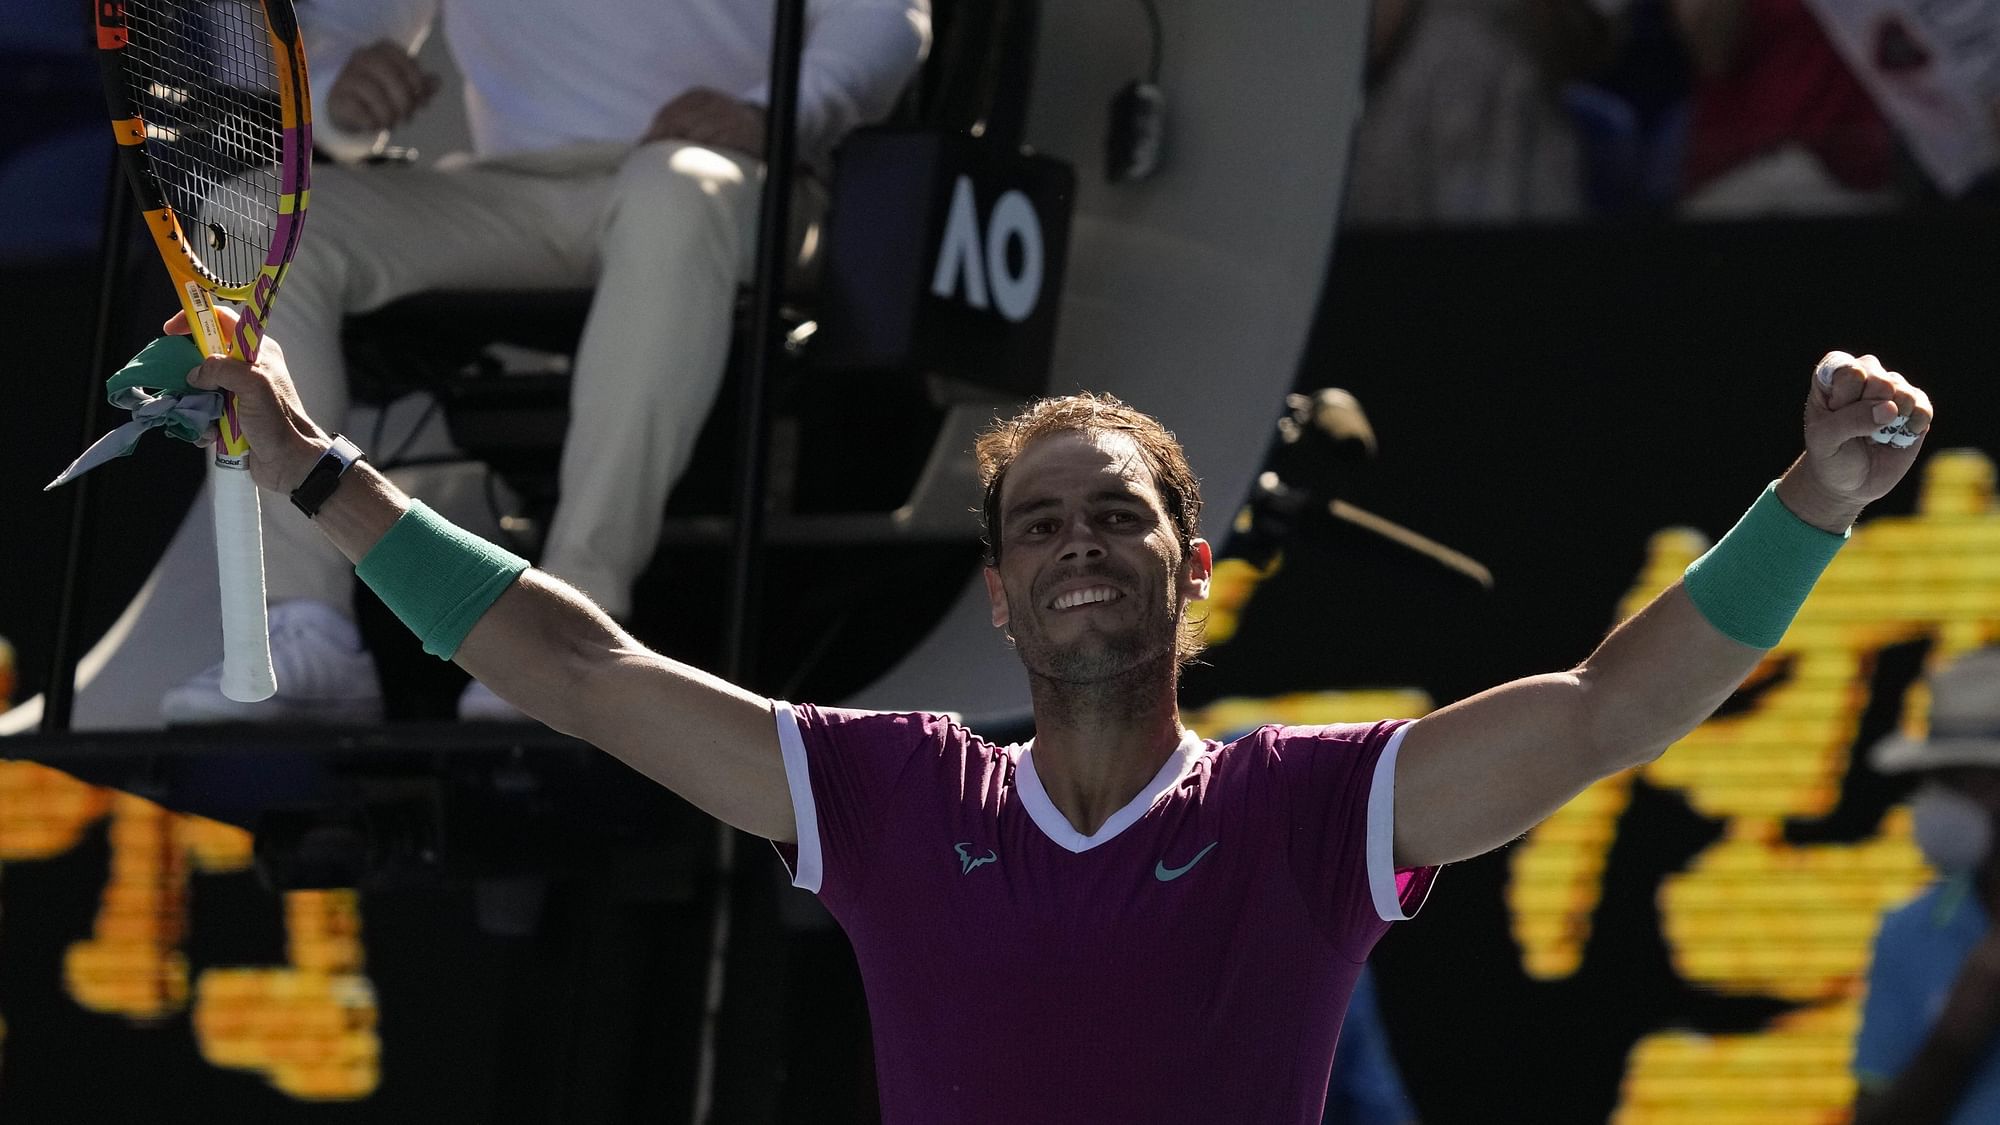 <div class="paragraphs"><p>Rafael Nadal will face Daniil Medvedev for the Australian Open title on Sunday.</p></div>